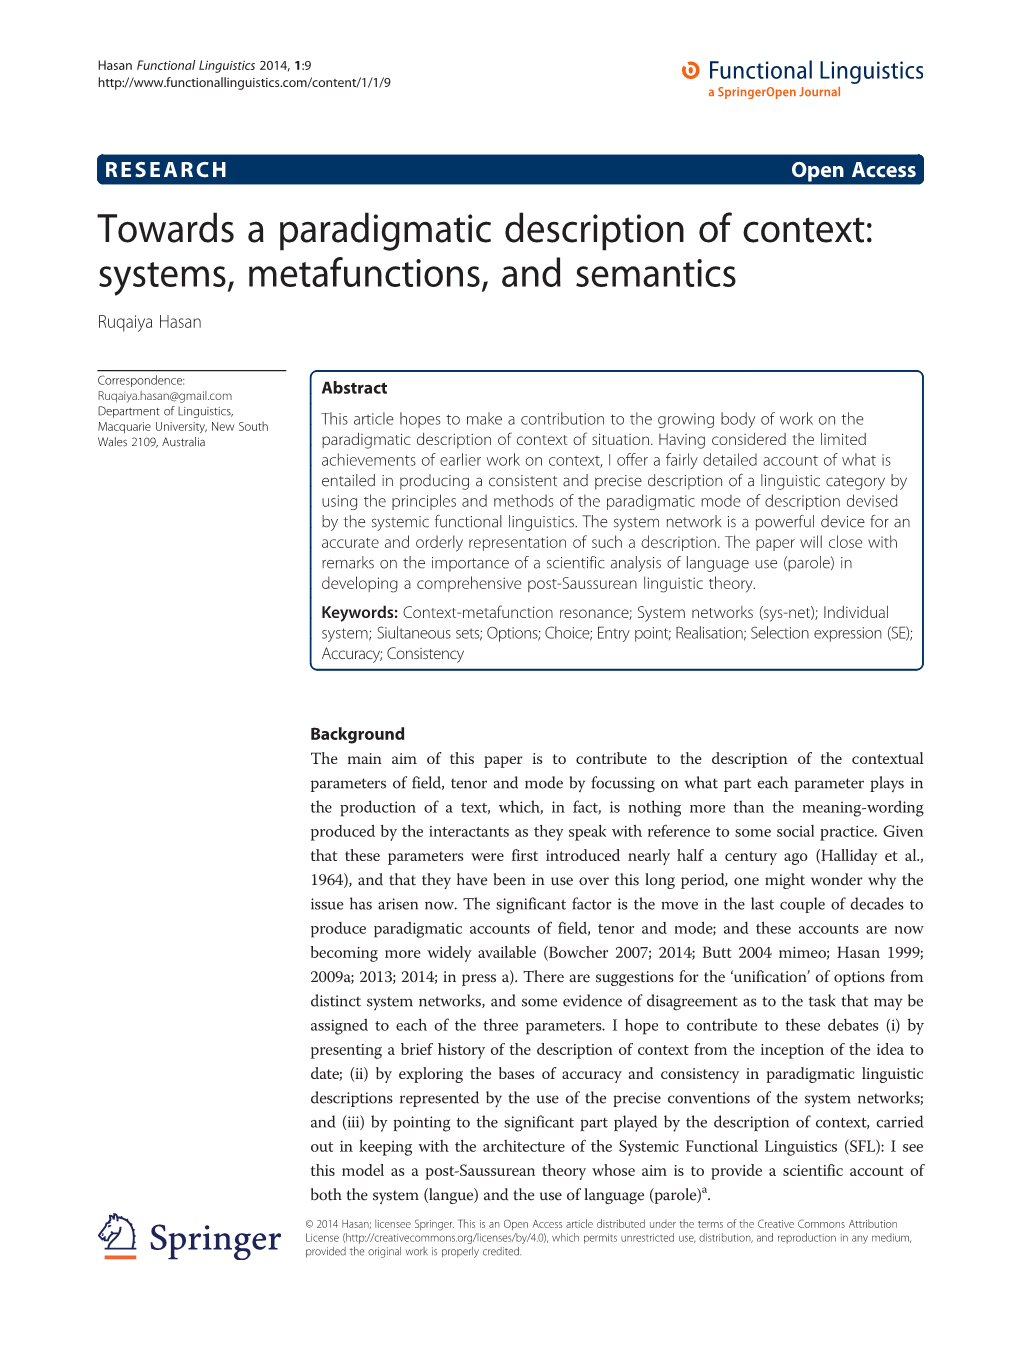 Towards a Paradigmatic Description of Context: Systems, Metafunctions, and Semantics Ruqaiya Hasan